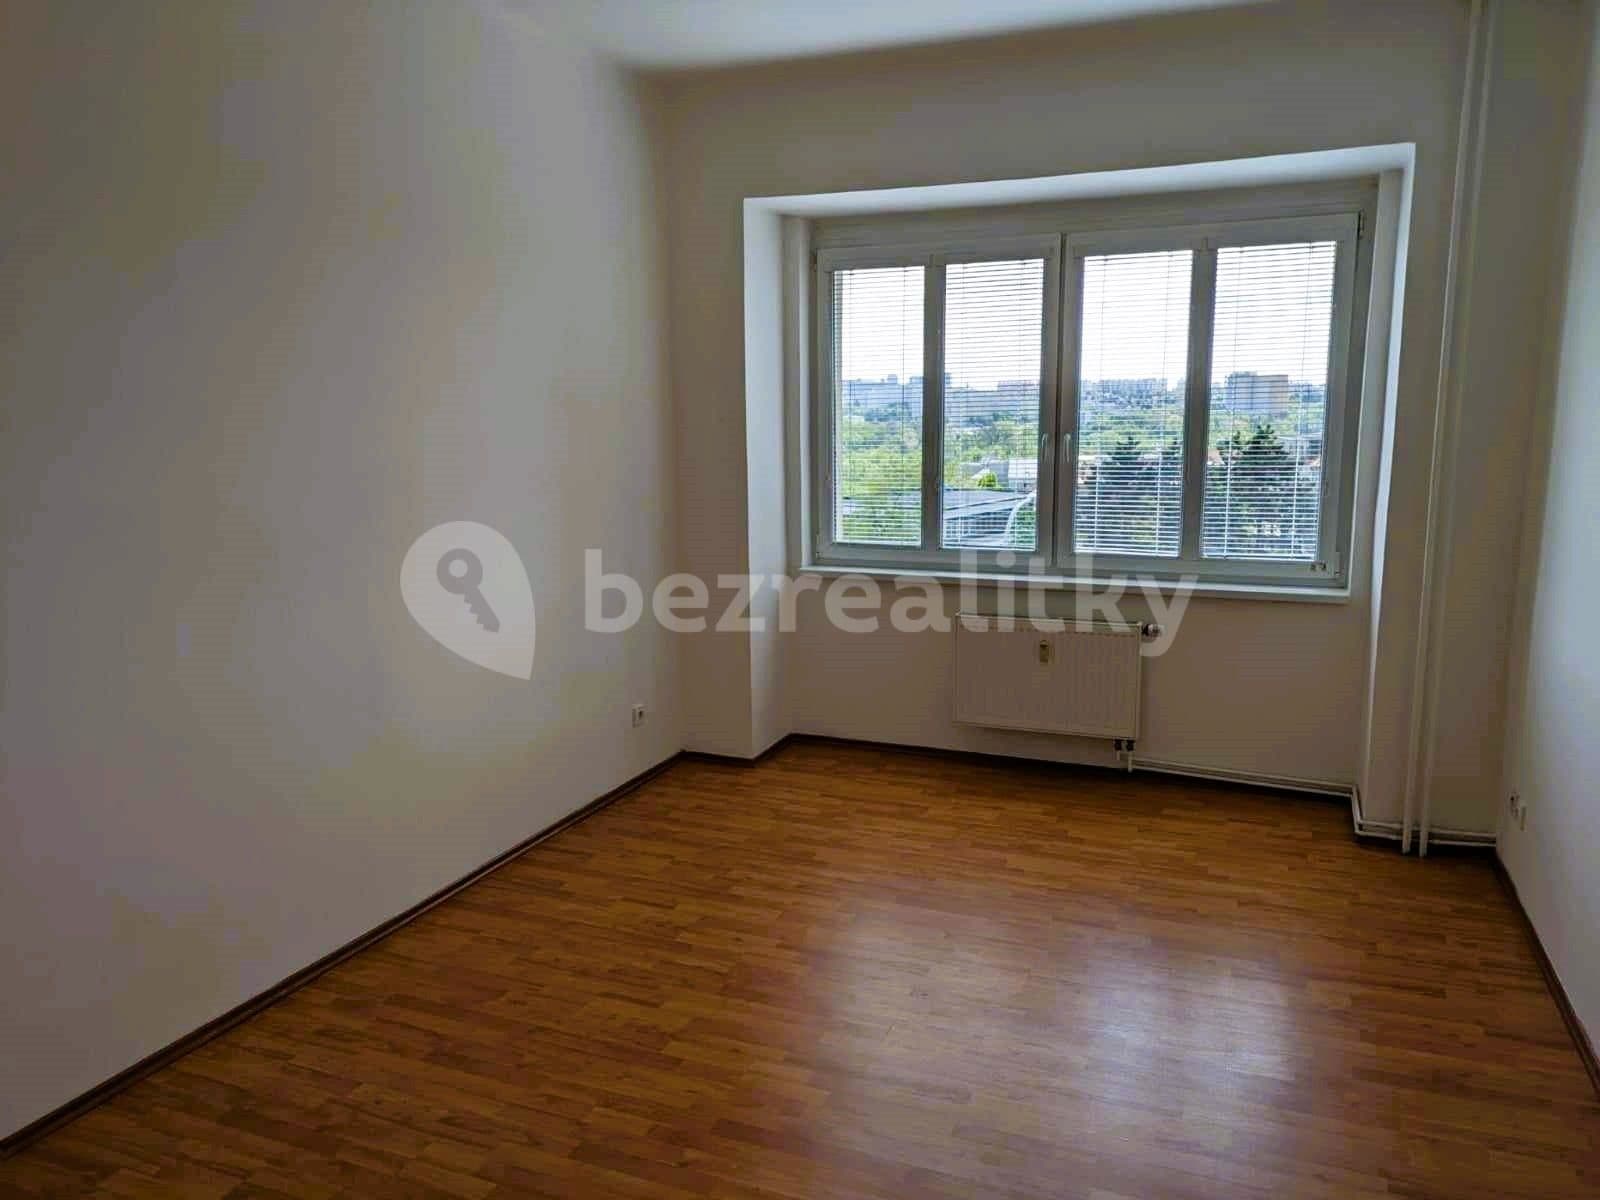 2 bedroom with open-plan kitchen flat to rent, 73 m², Jihlavská, Prague, Prague